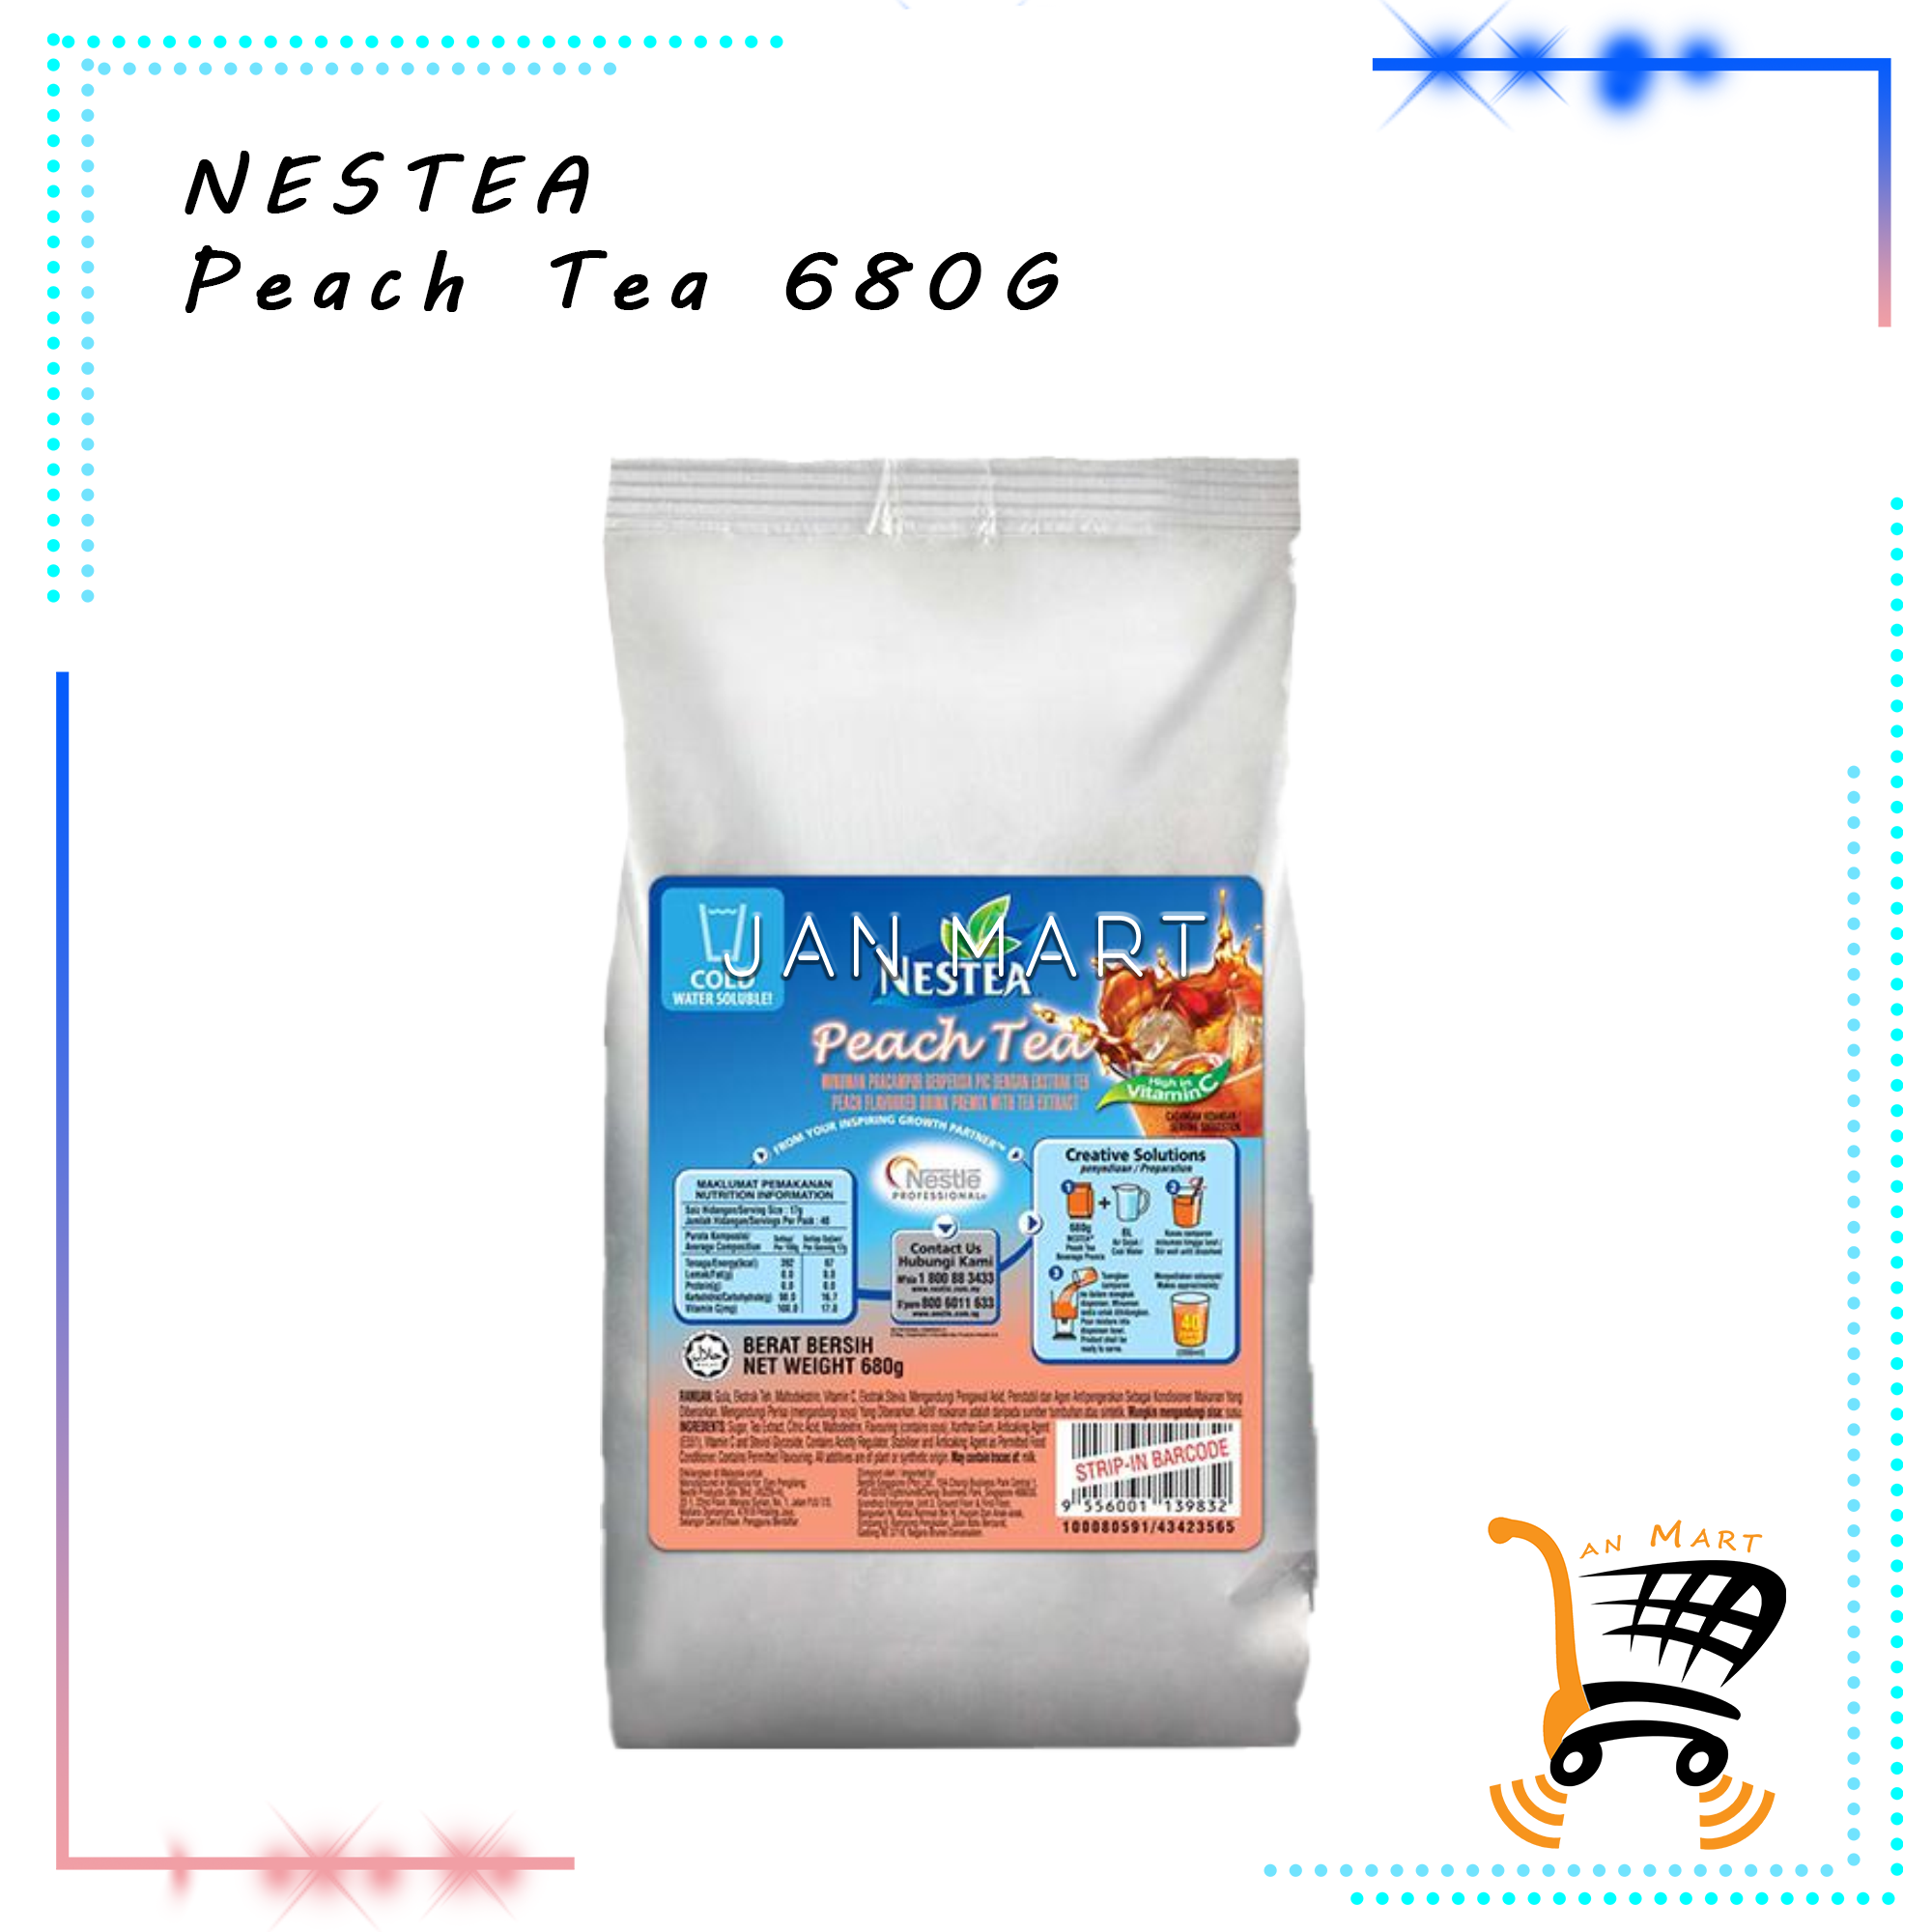 NESTEA Peach Tea 680G